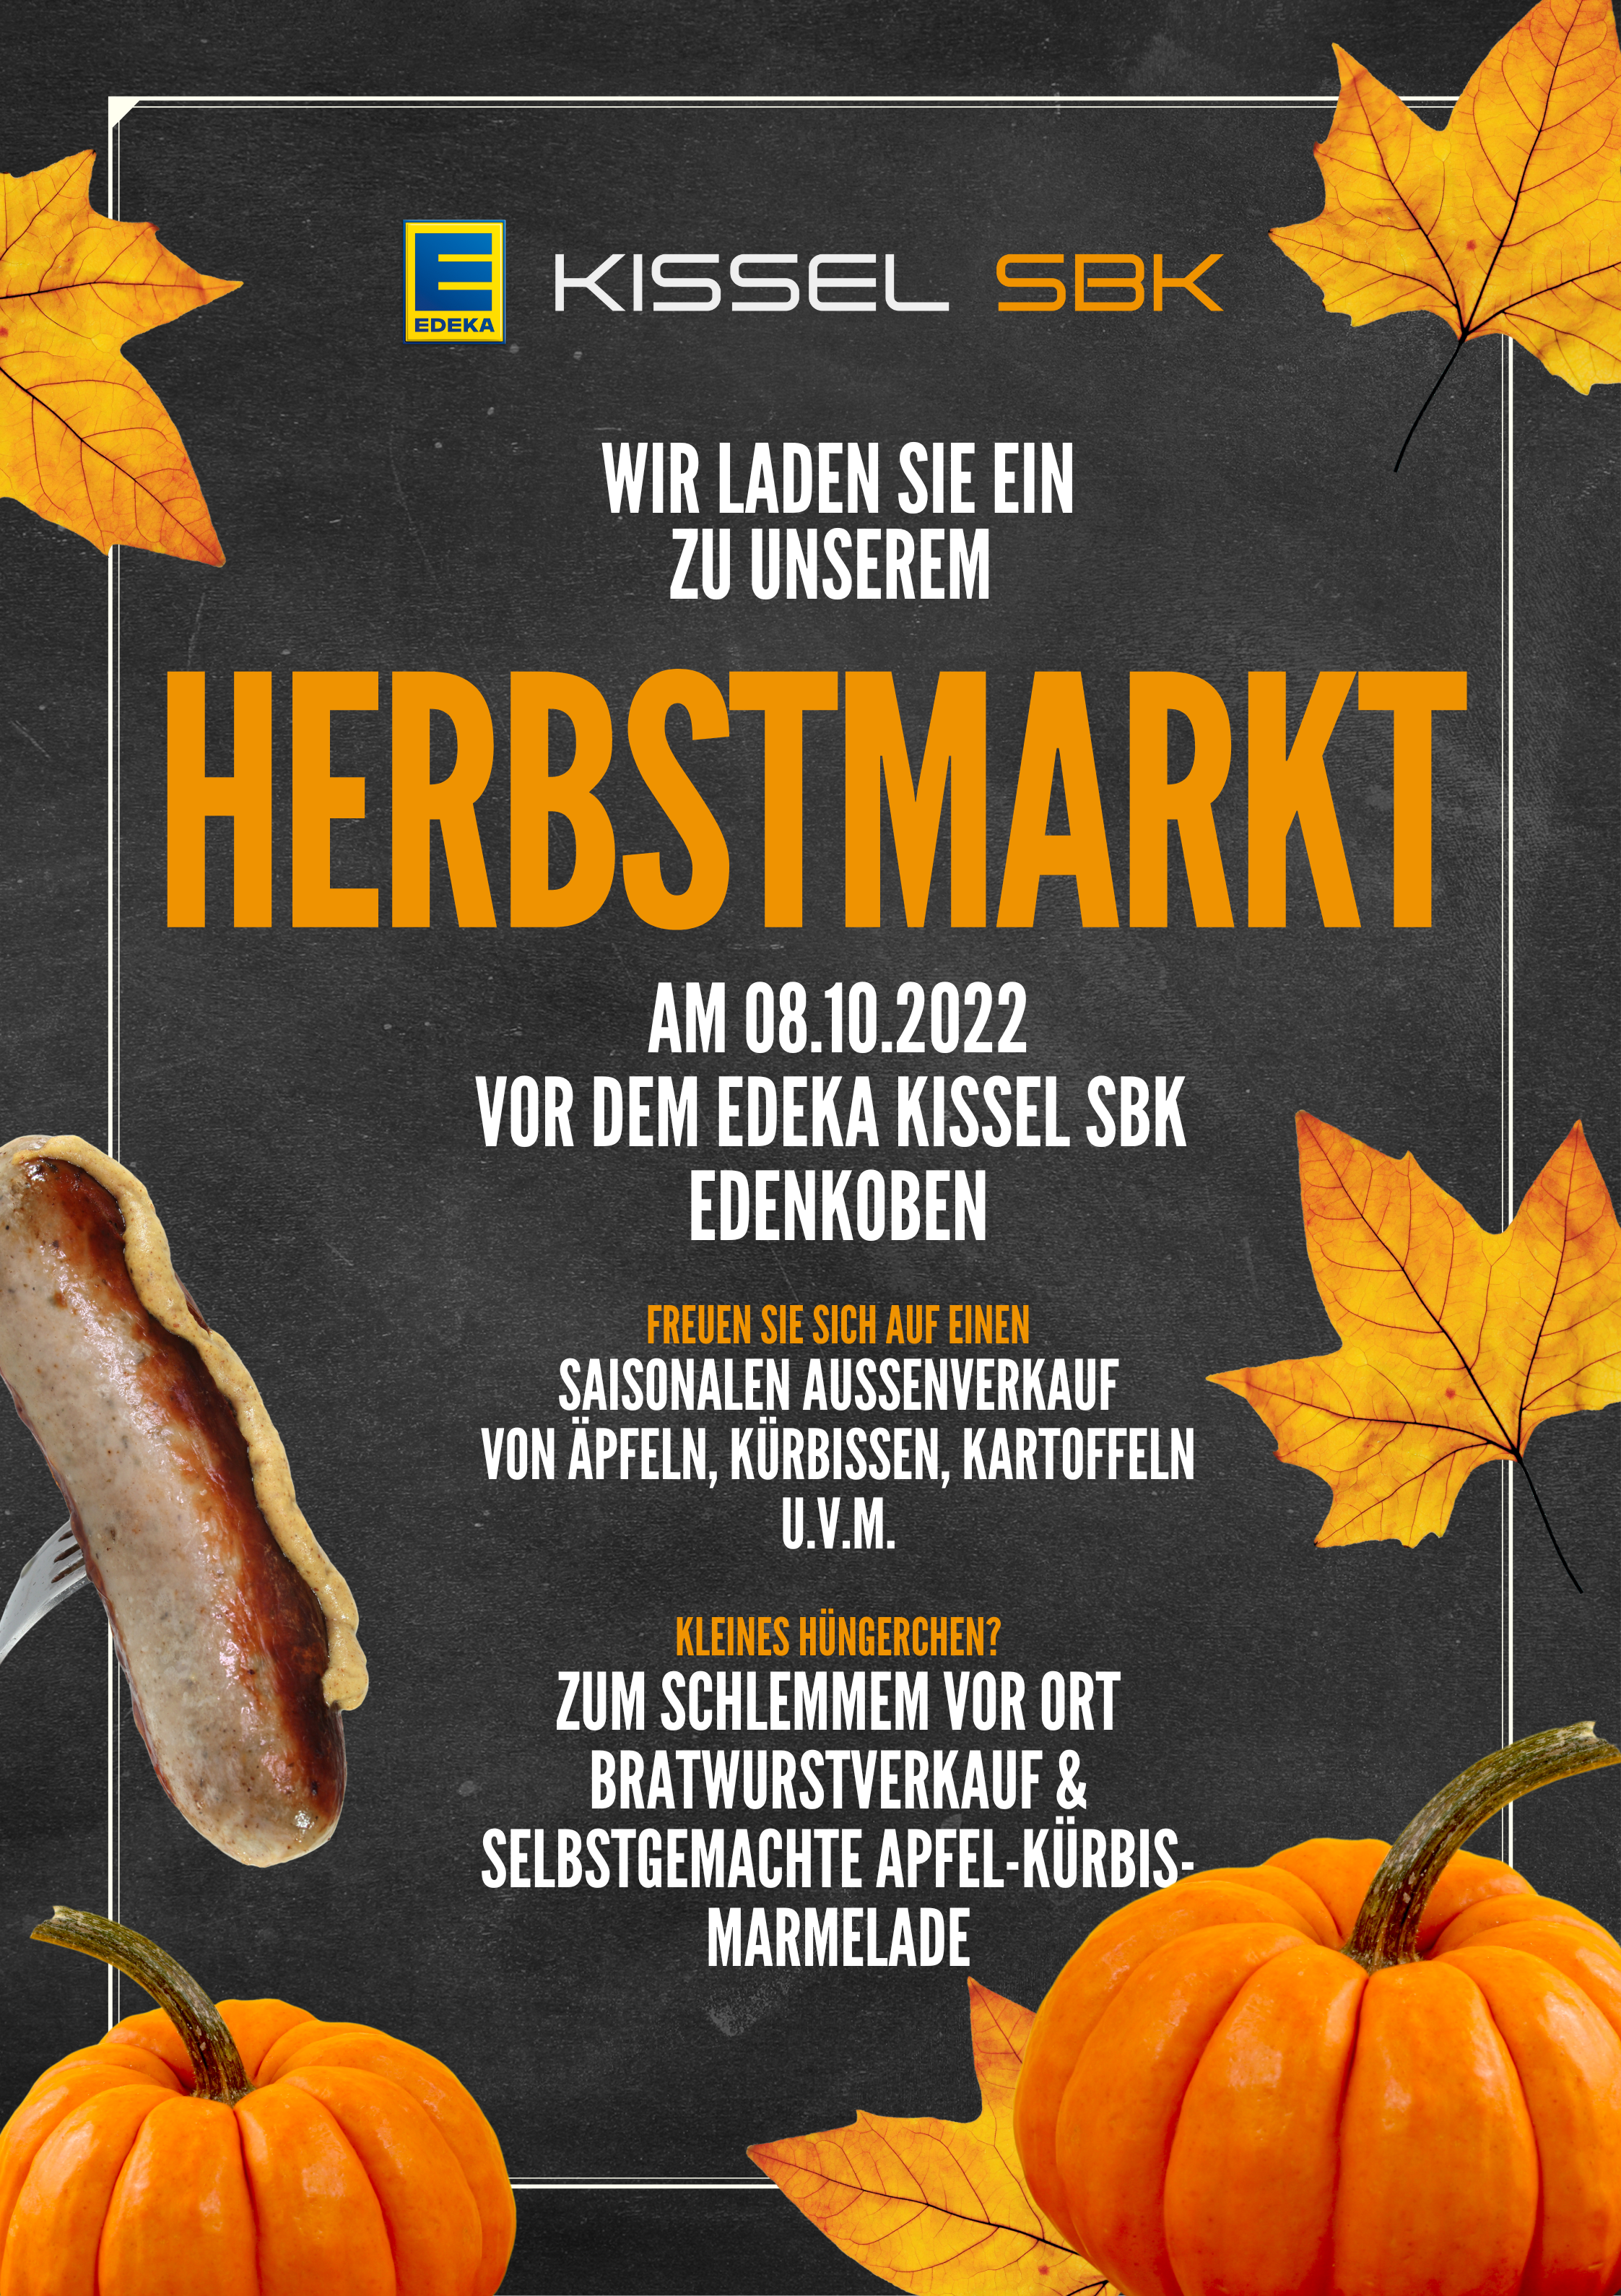 Herbstmarkt am Edeka-Kissel-SBK-Markt in Edenkoben